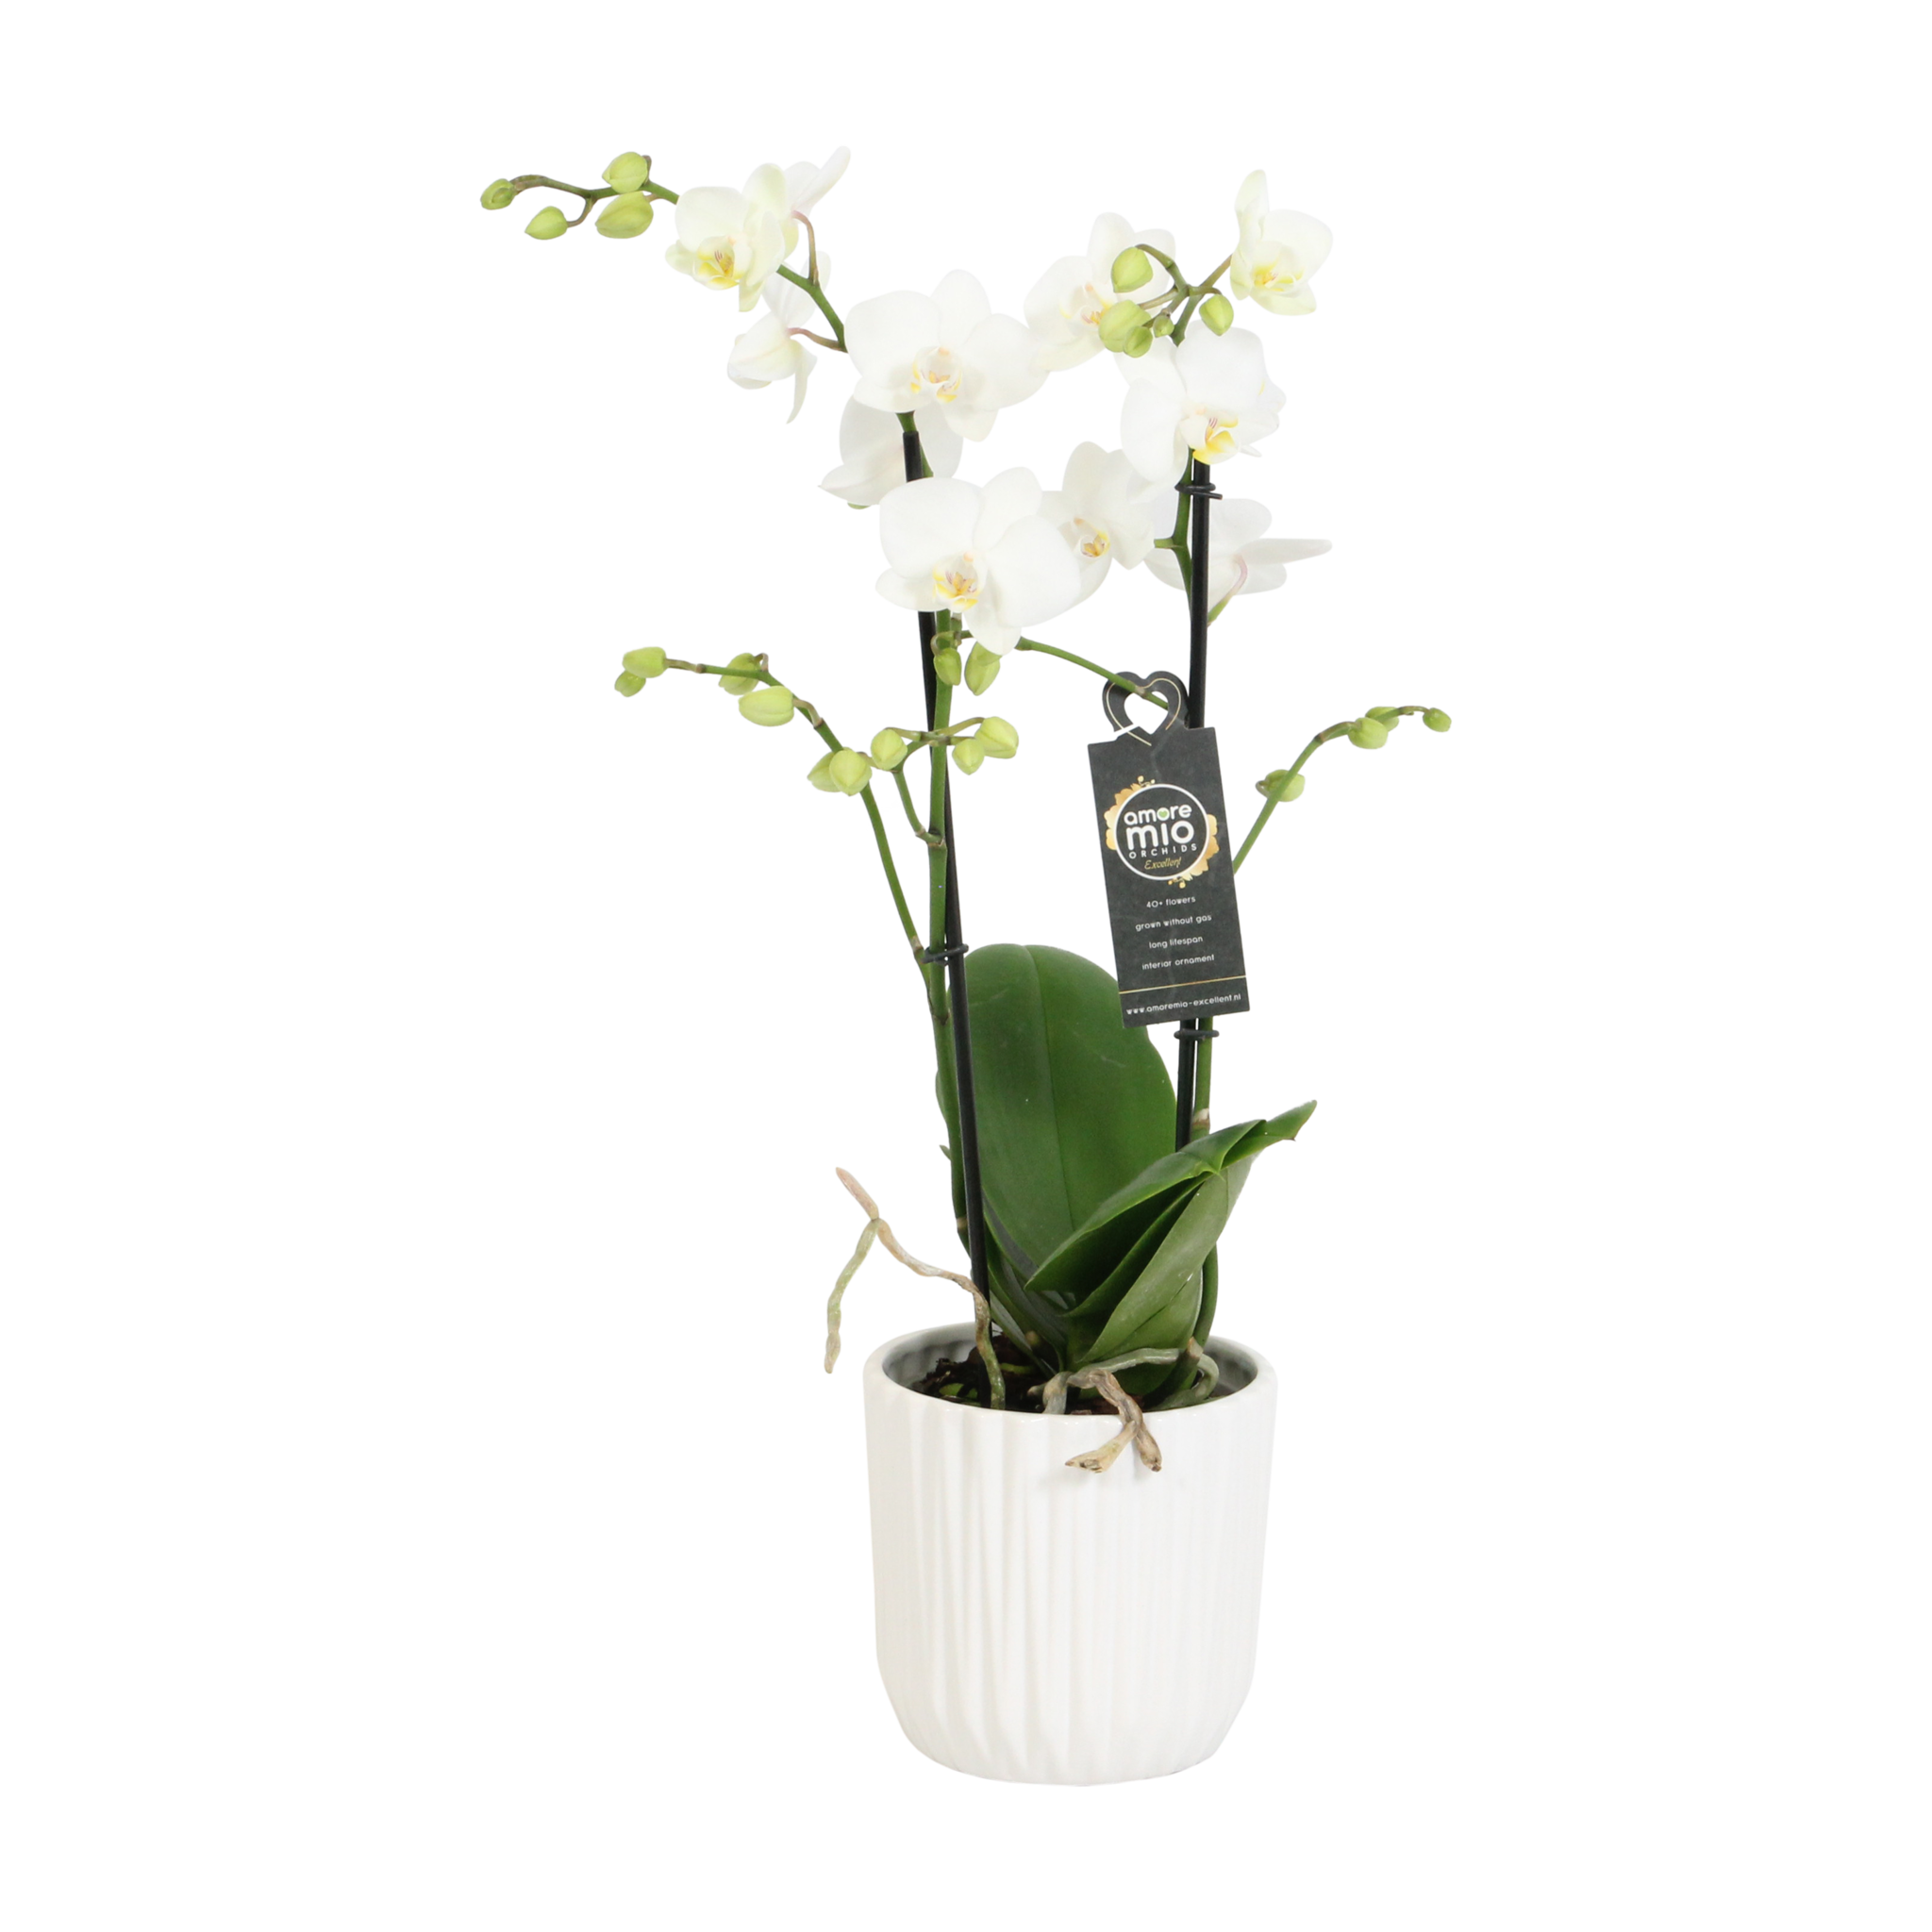 Snow Flake met White Ceramic 2 (Phalaenopsis Snow Flake met White Ceramic 2 - 12x45 cm)